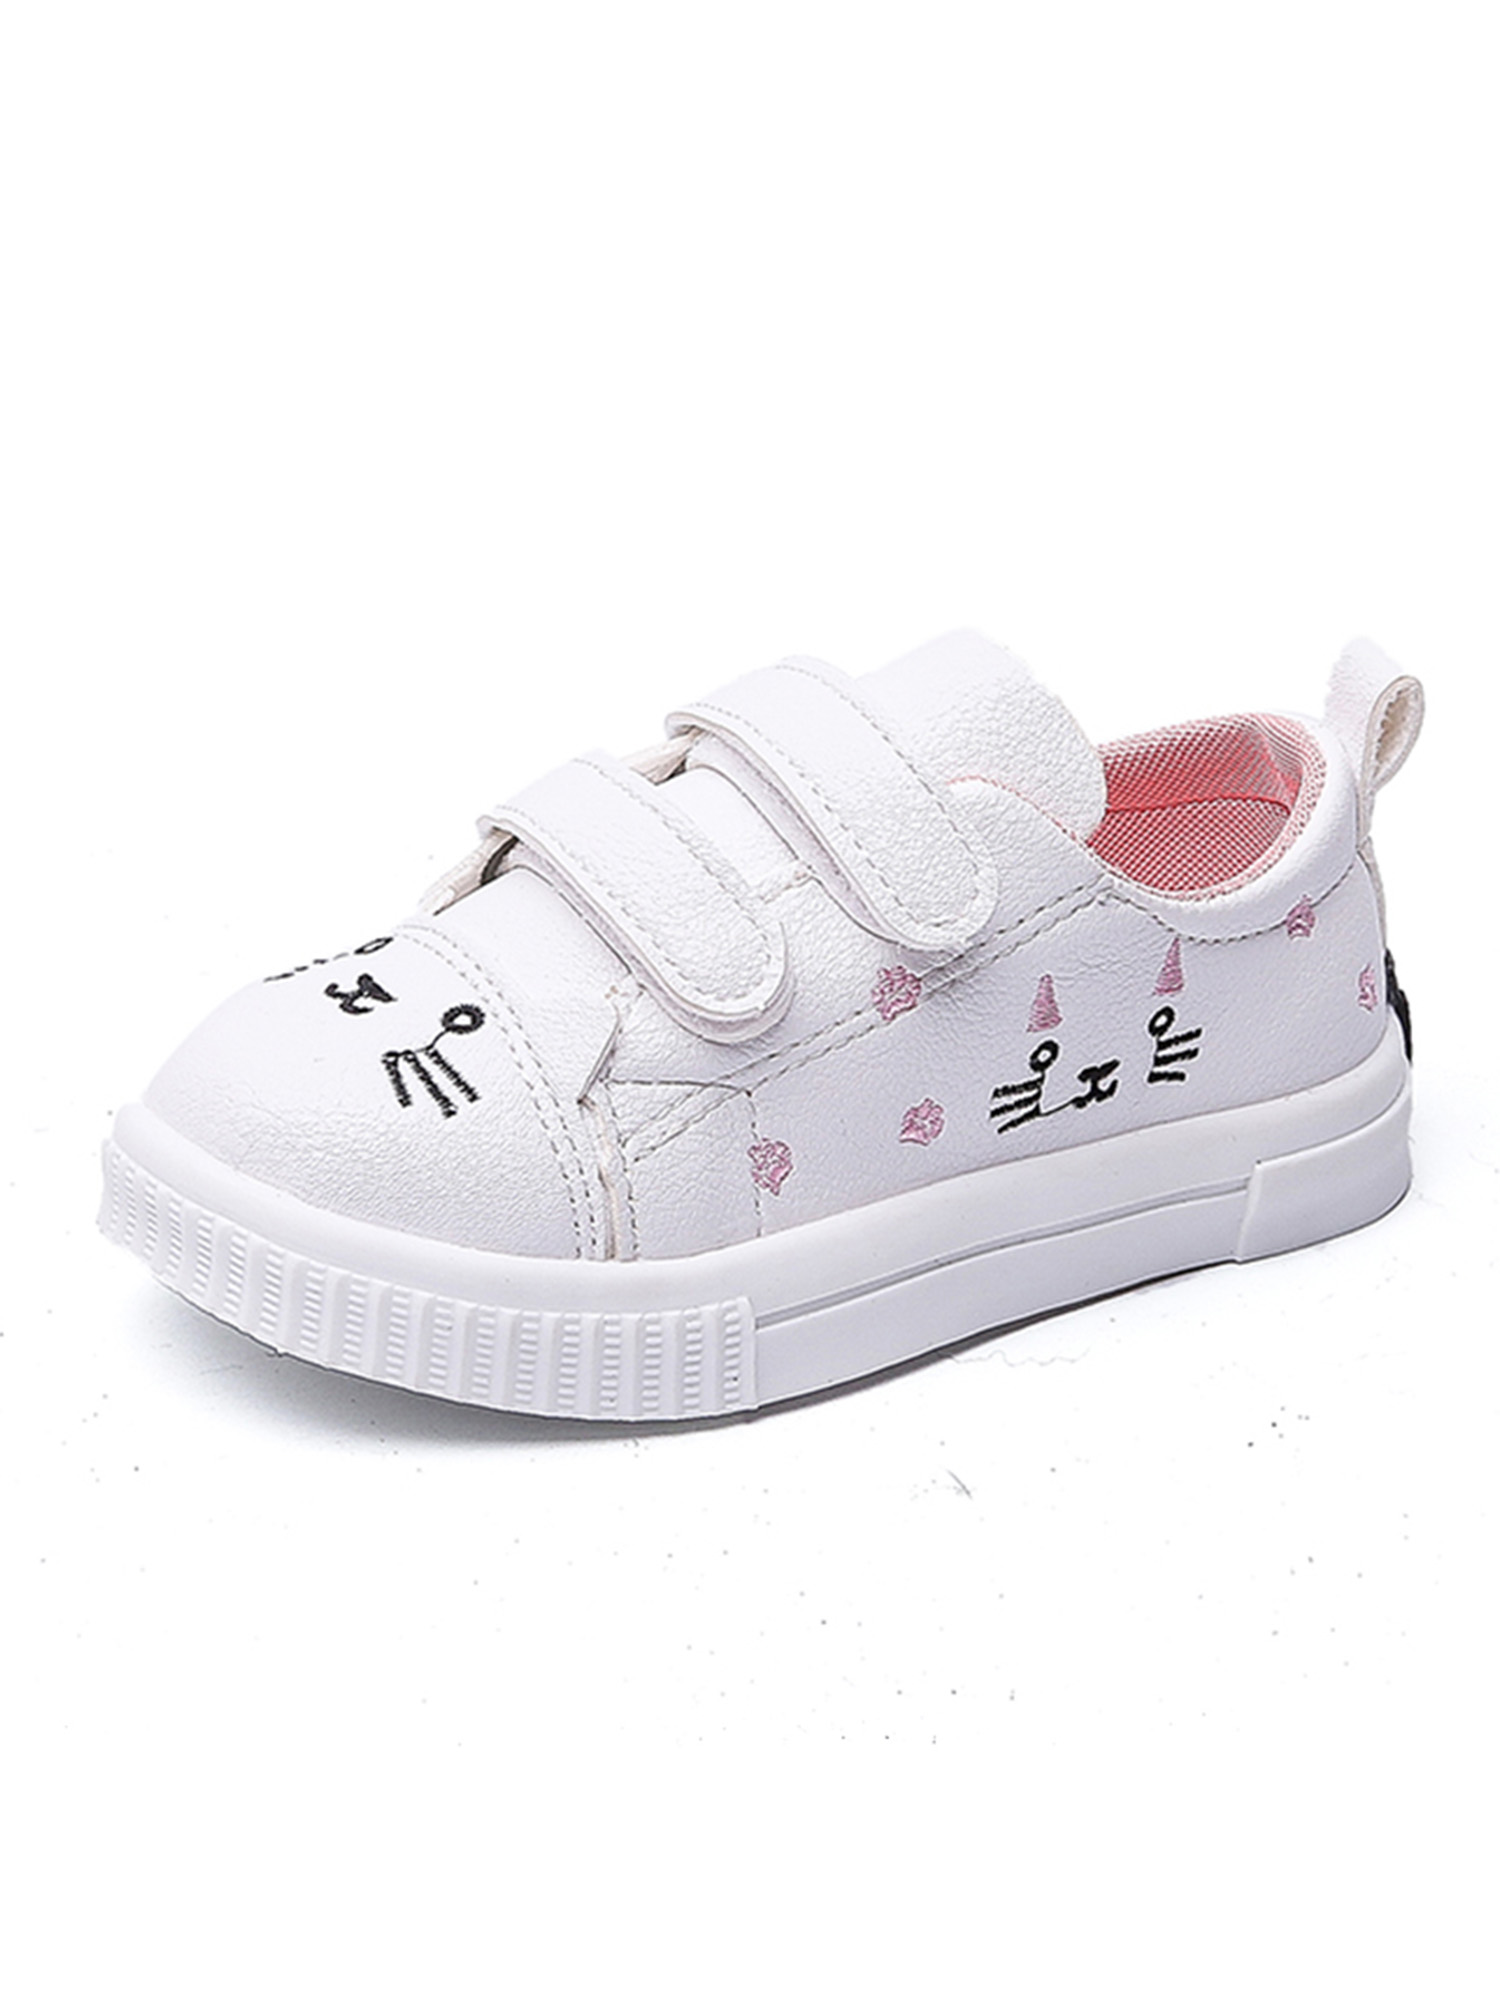 UKAP Boys Girls Anti-Slip Classic Low Top Slip On Sneakers Tennis Shoes Kids Flat Shoes - image 1 of 5